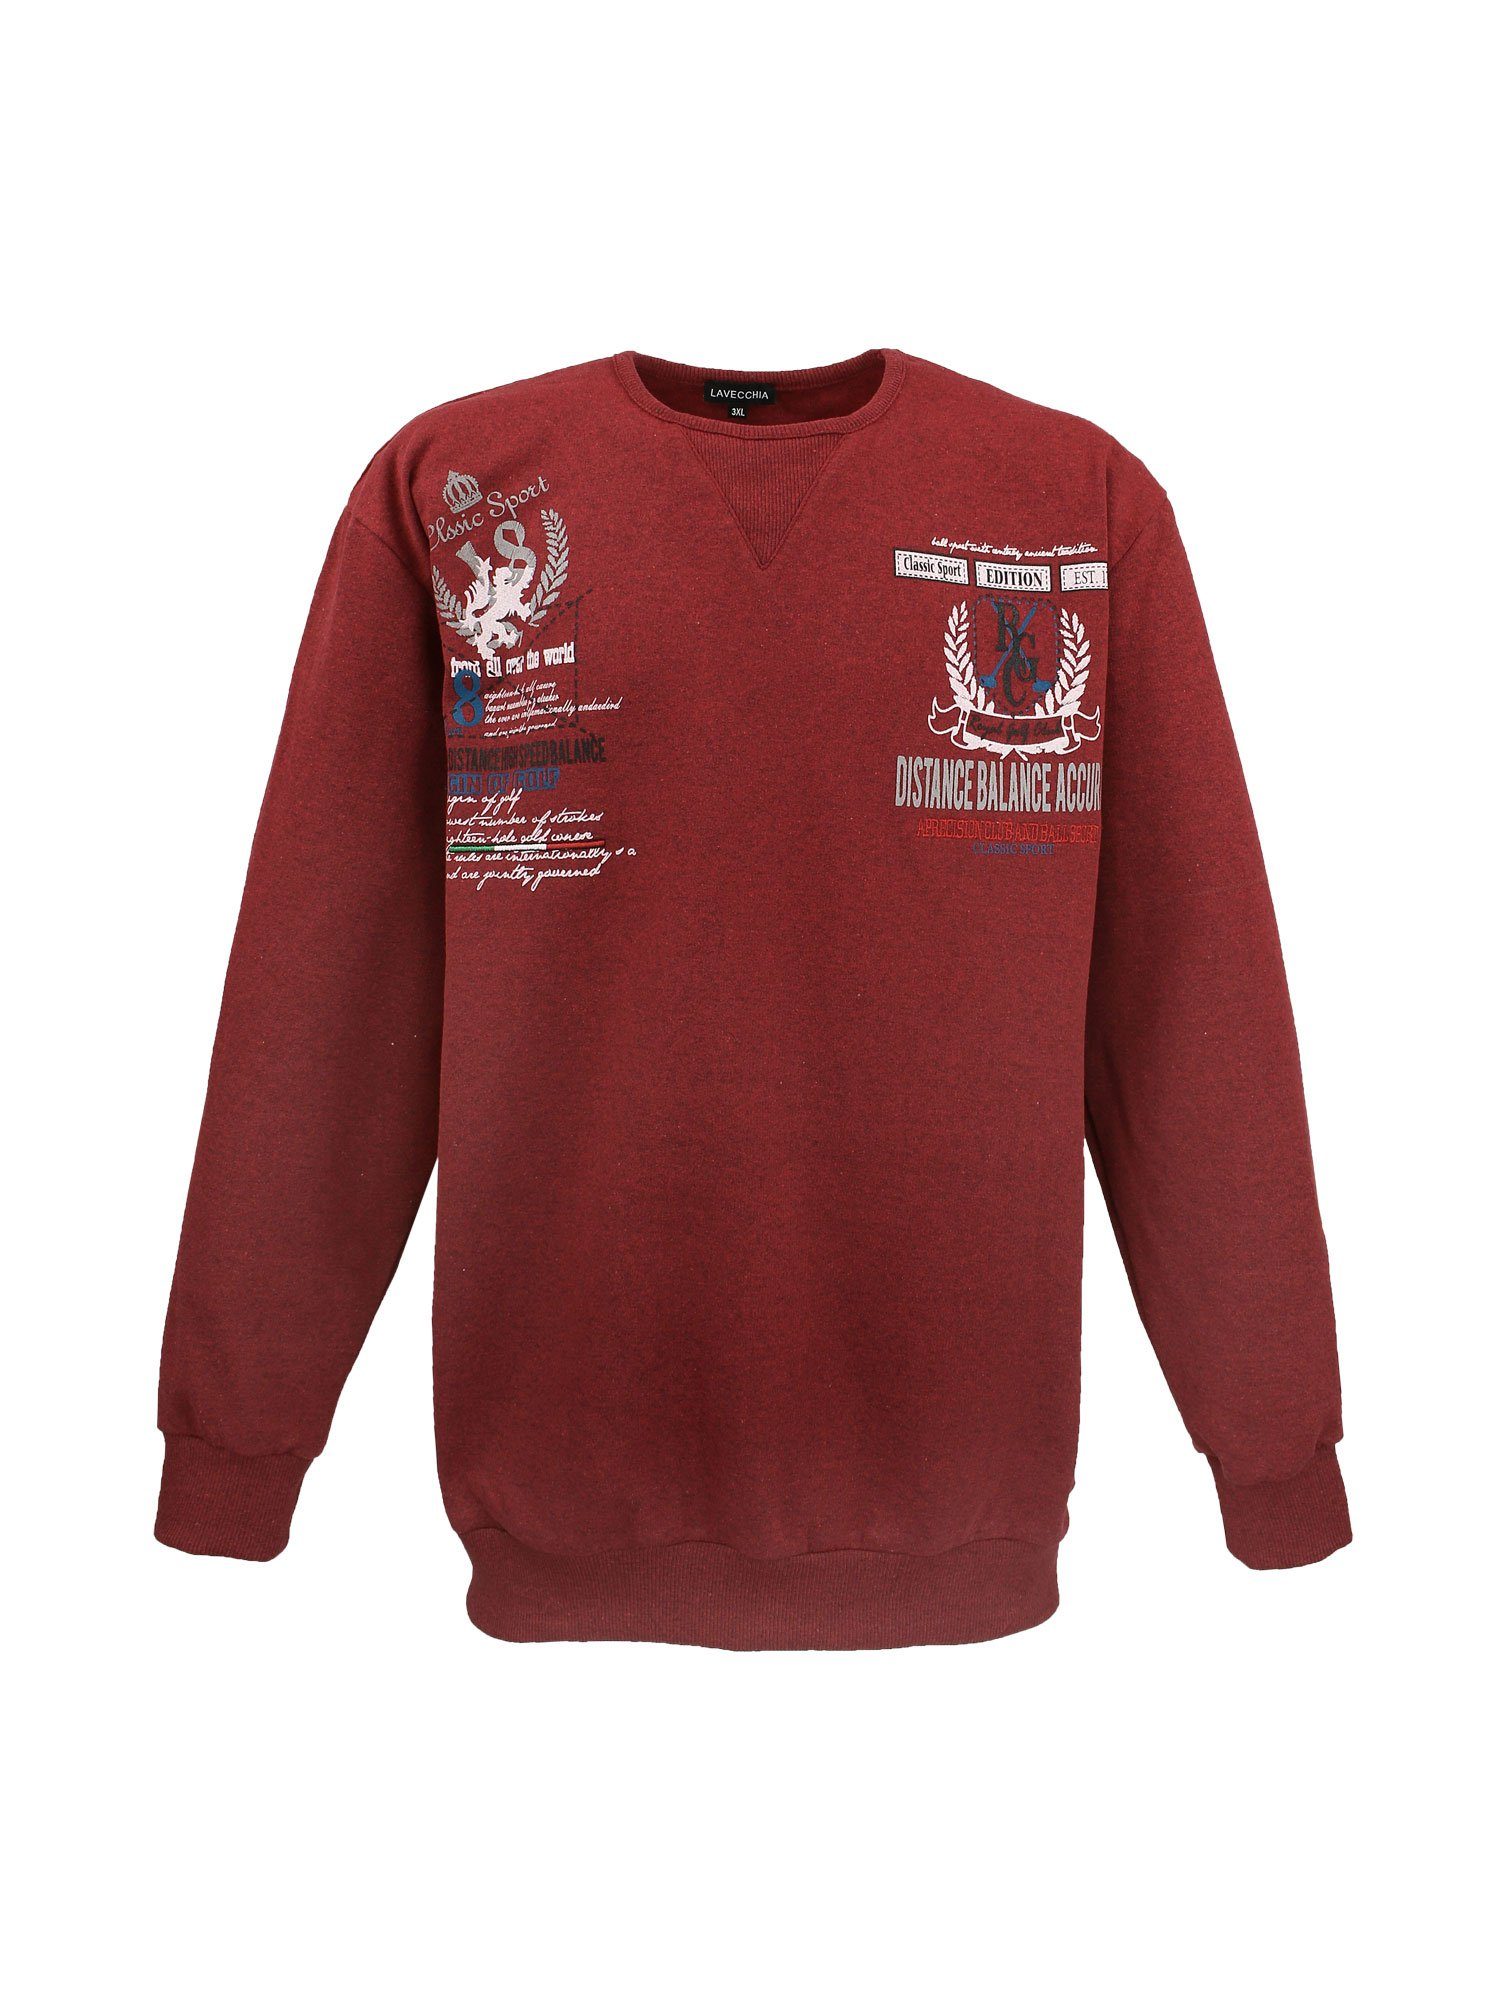 Sweatshirt Sweat Lavecchia Pulli Pullover Sweater Übergrößen LV-603 bordo-rot-meliert